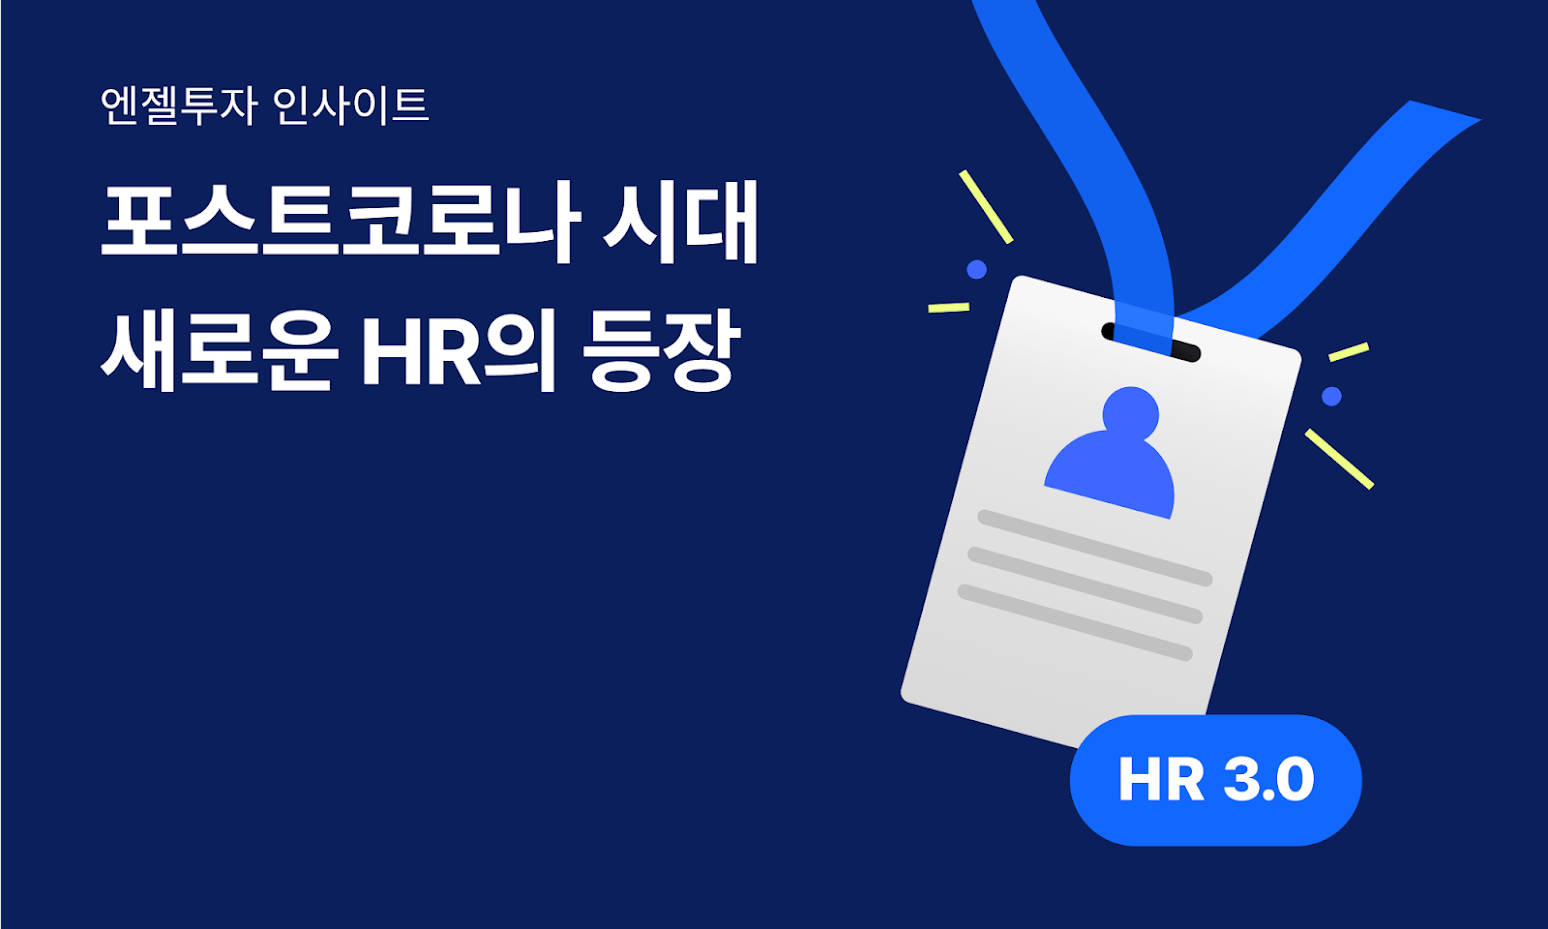 HR 3.0 “지속적인 피드백, 개인화, 업스킬링”